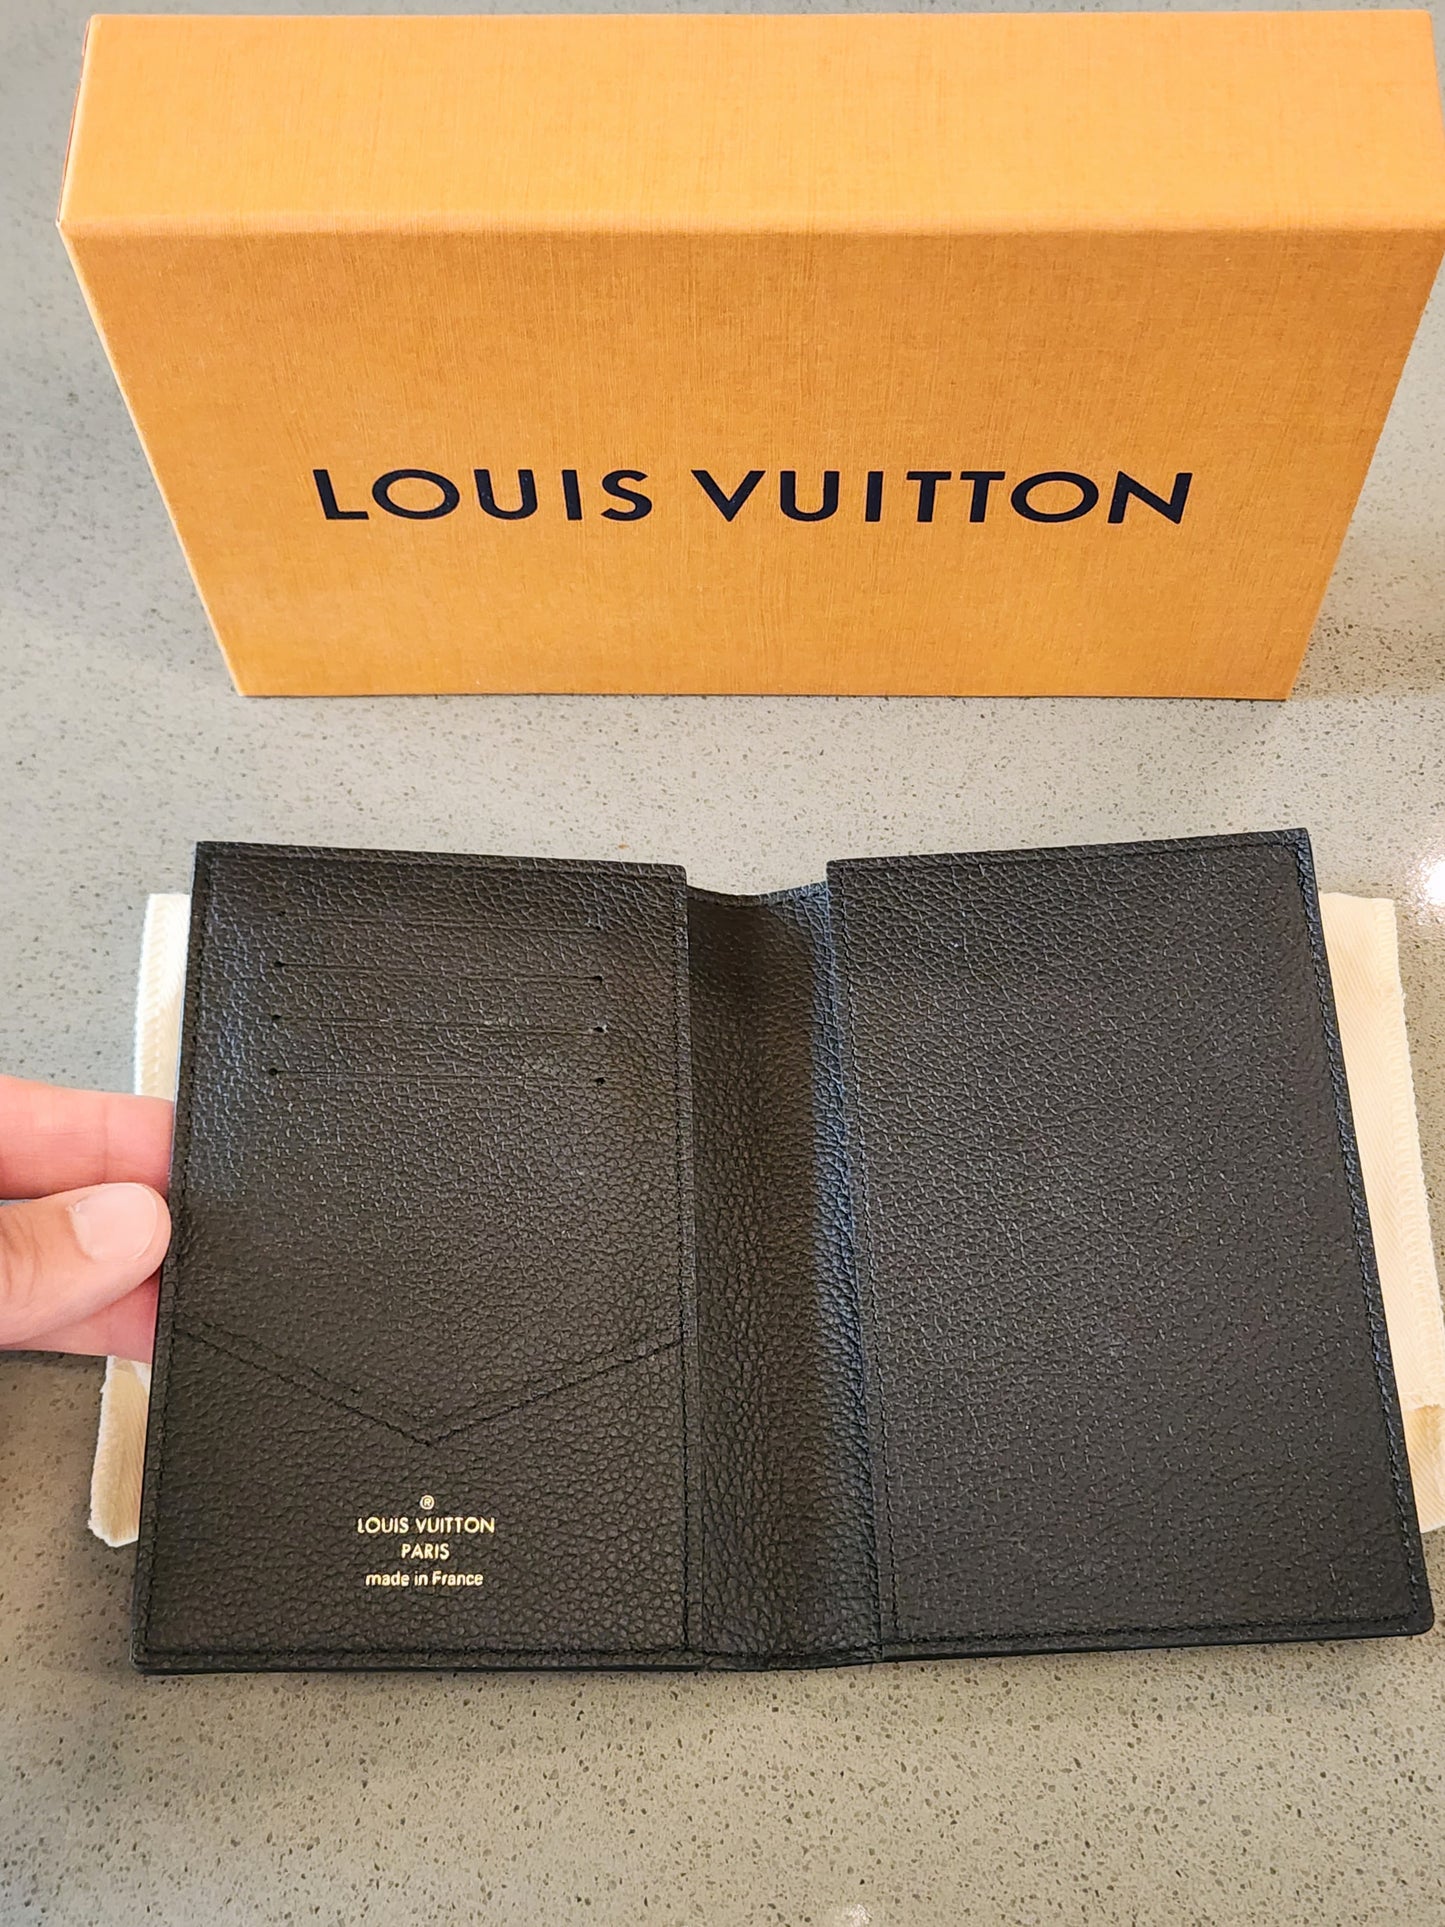 LOUIS VUITTON Monogram Empreinte Black Leather Passport Cover NEW